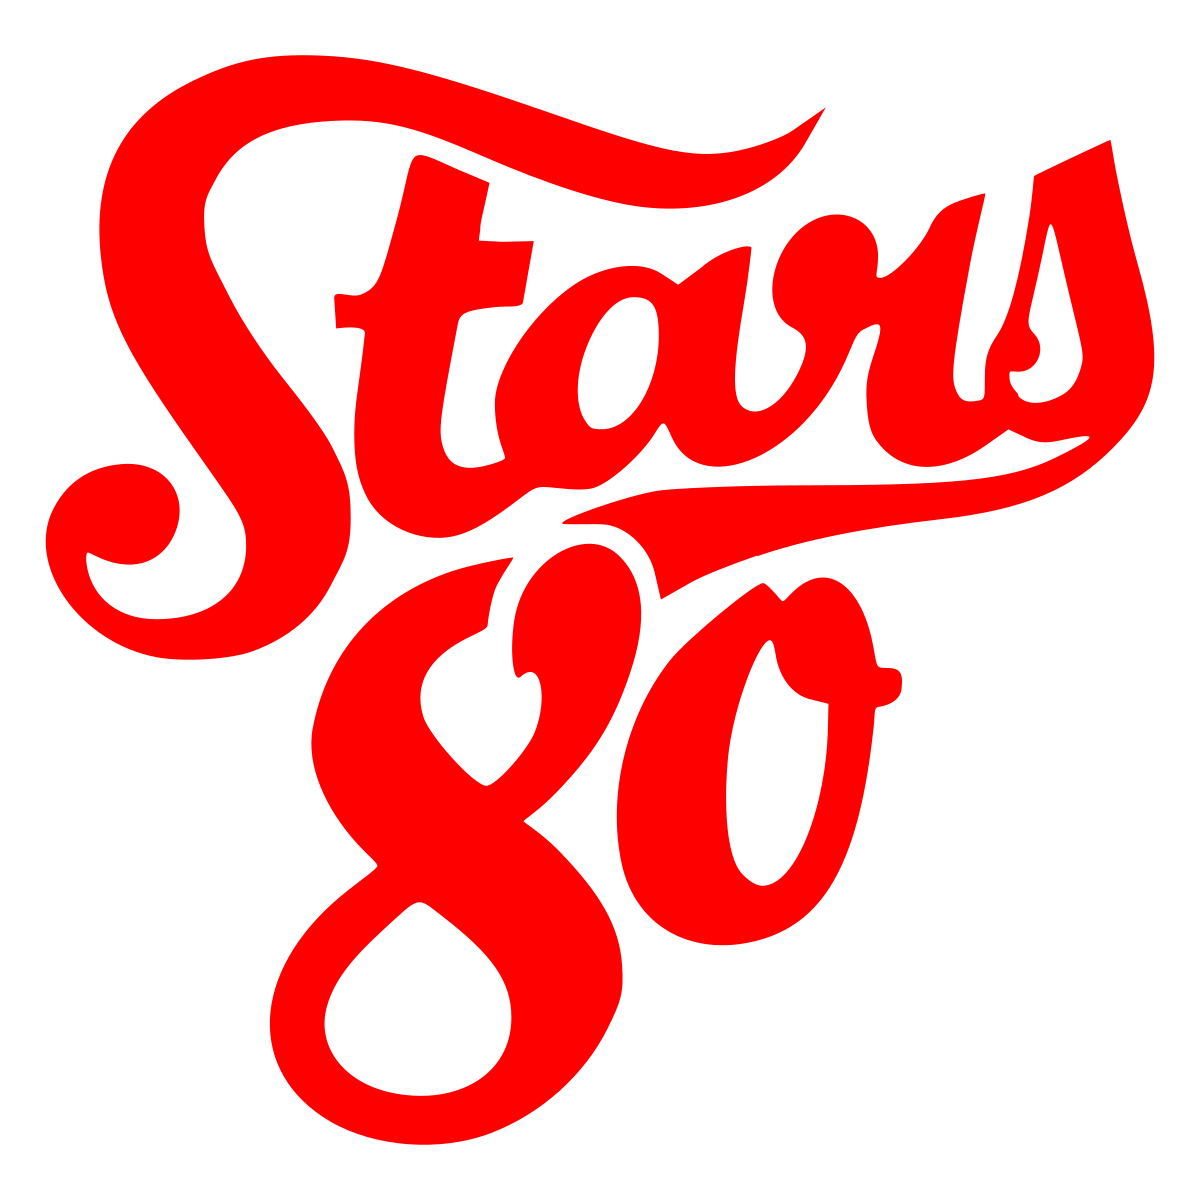 Stars 80